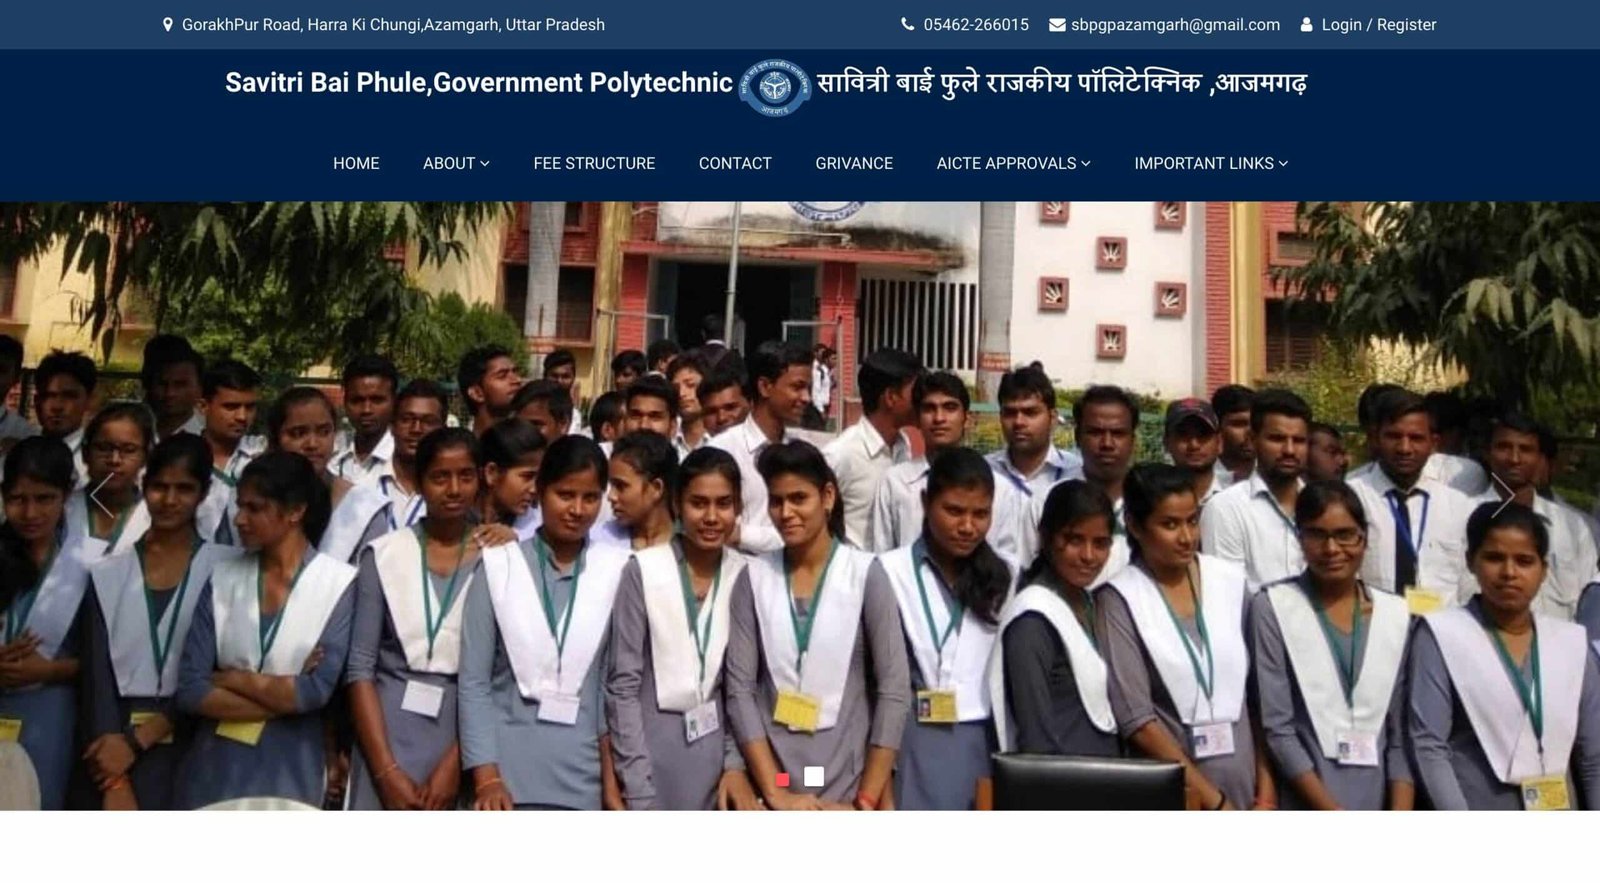 Government Polytechnic Bhilihili, Azamgarh